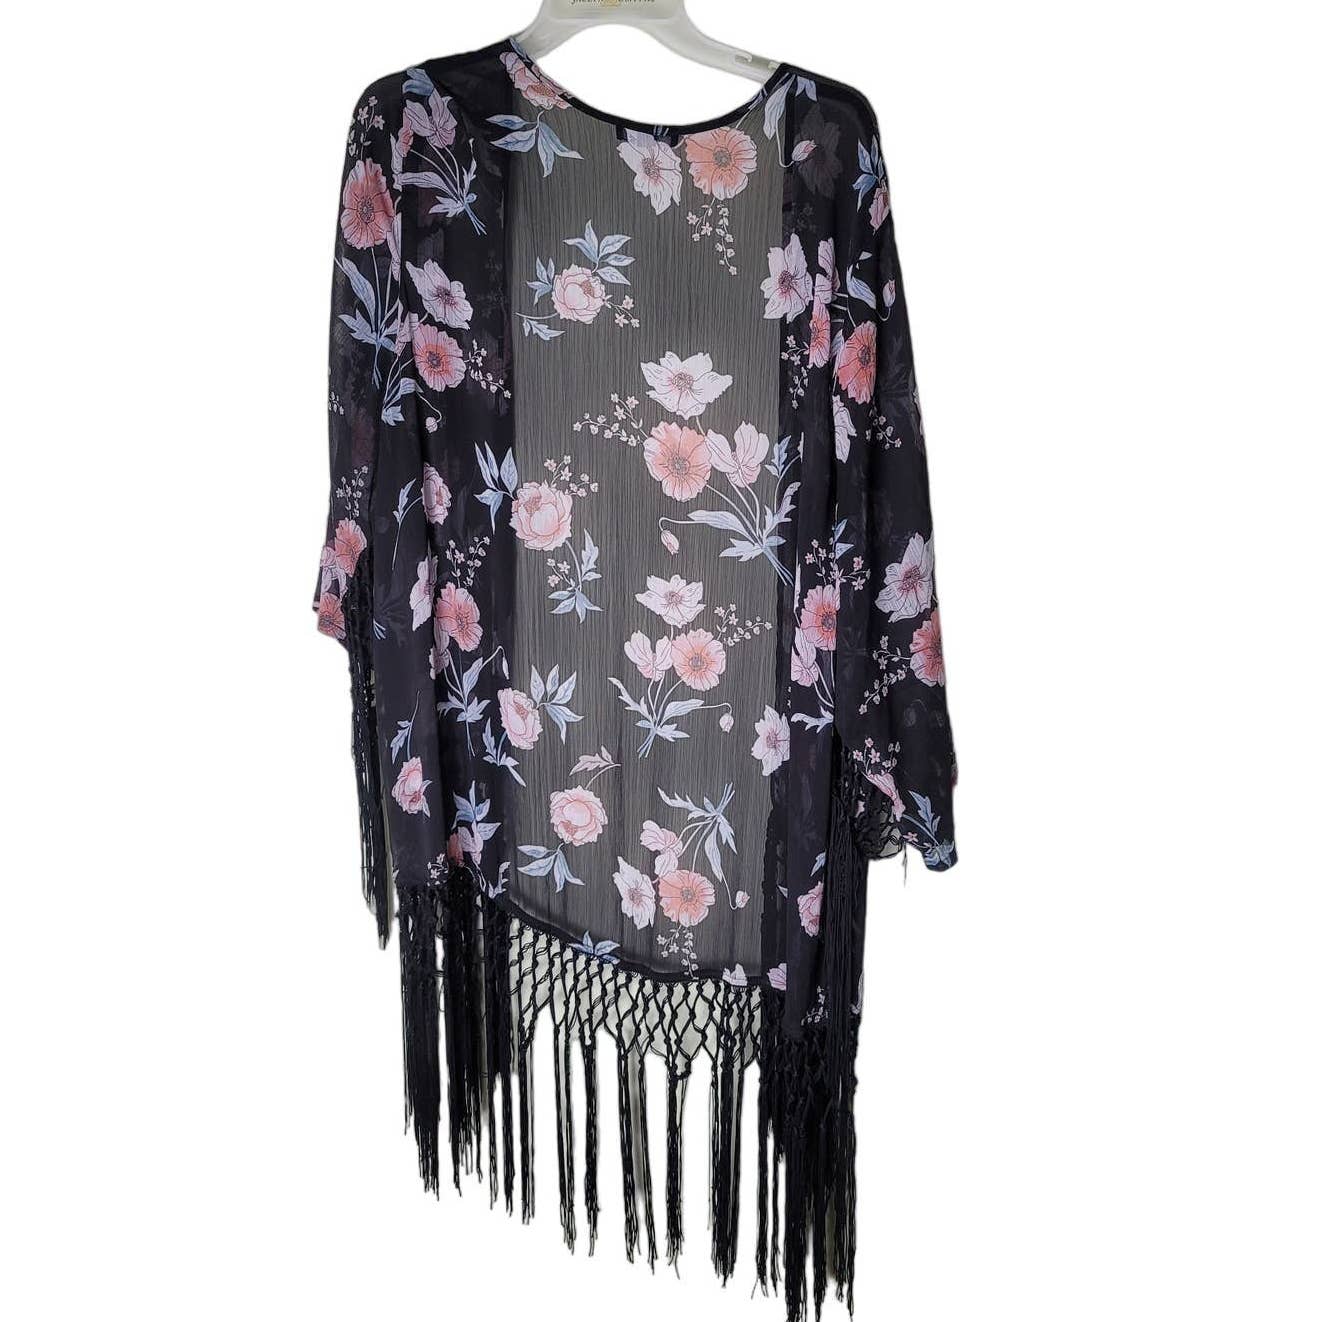 Torrid Chiffon Kimono Black Floral Print Fringe Open Sheer Plus Size 1X 2X